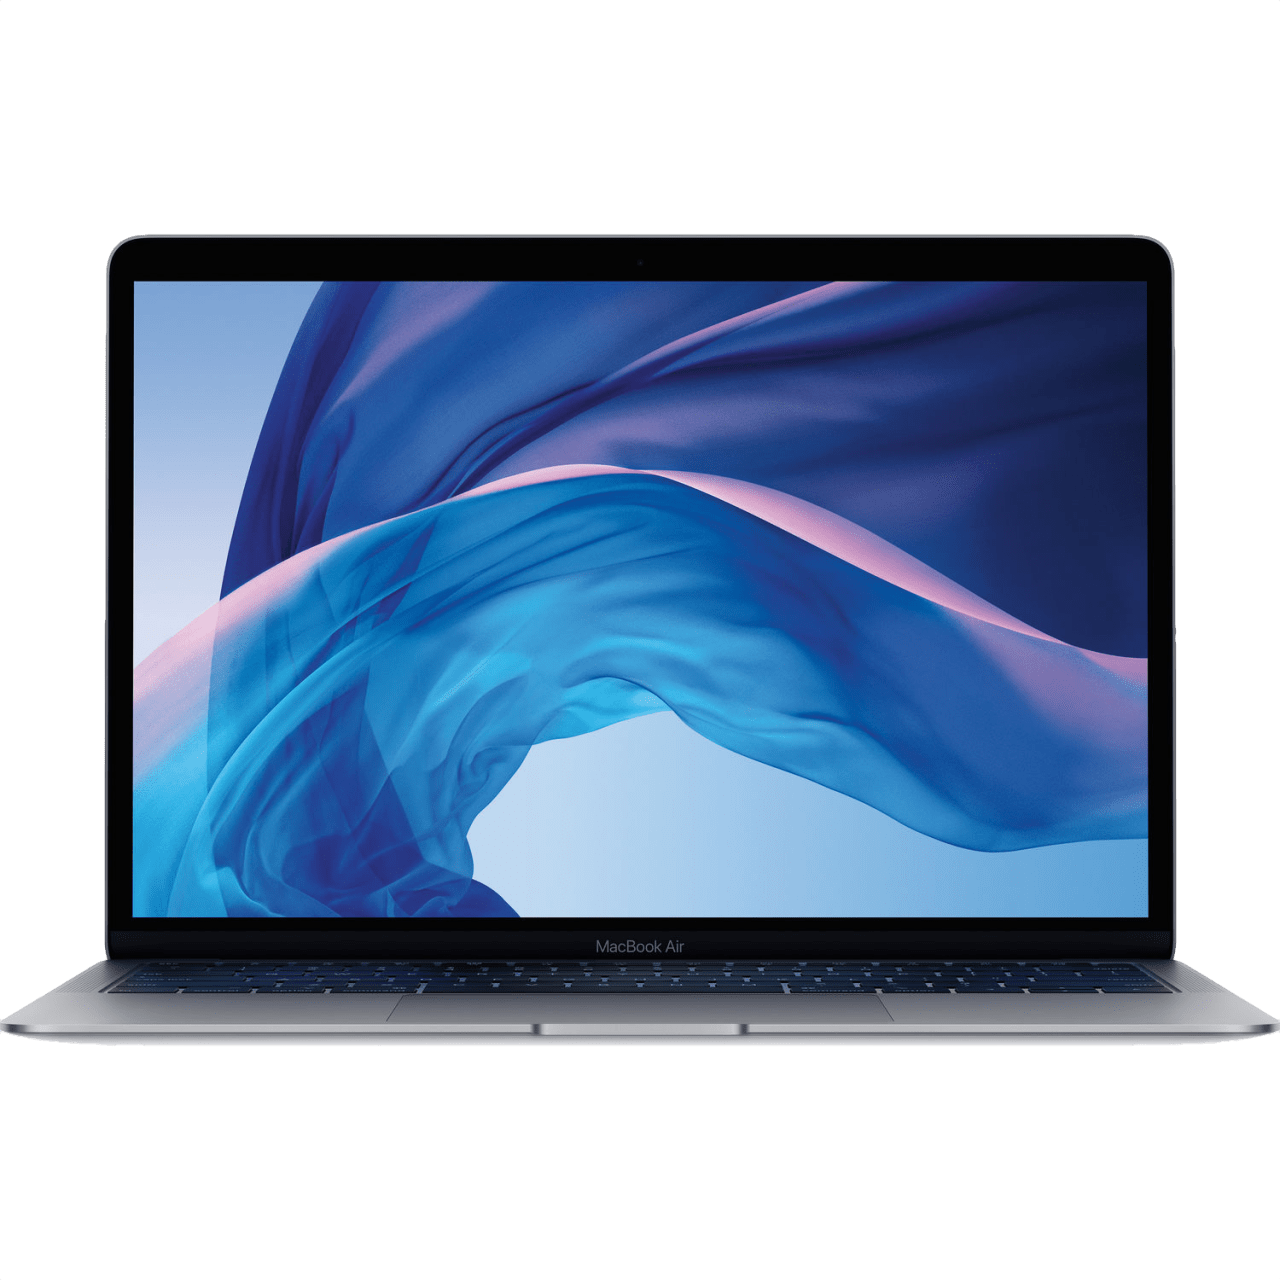 Gris Apple Macbook Air (Mid 2019) - English (QWERTY) Laptop - Intel® Core™ i5-8210Y - 16GB - 256GB SSD - Intel® UHD Graphics 617.1